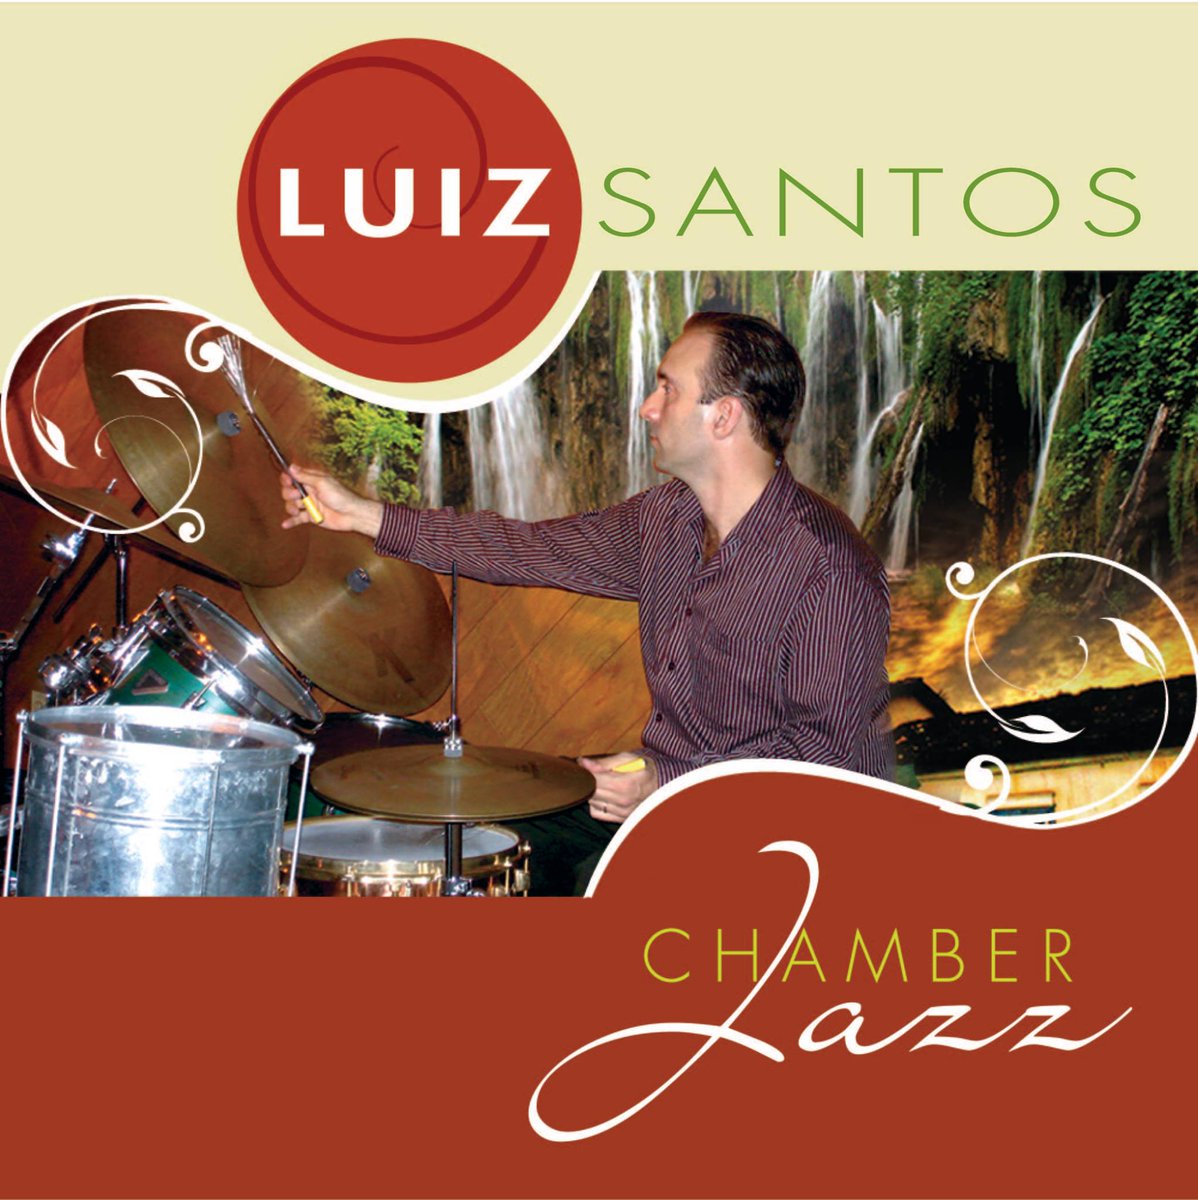 Watch 'Magic Of Florence'  by Luiz Santos  Subscribe!  
youtube.com/watch?v=A6WBks…
#drums #jazz #art #drummer #latinjazz #brazilianjazz #worldmusic #afrobraziljazz #percussion